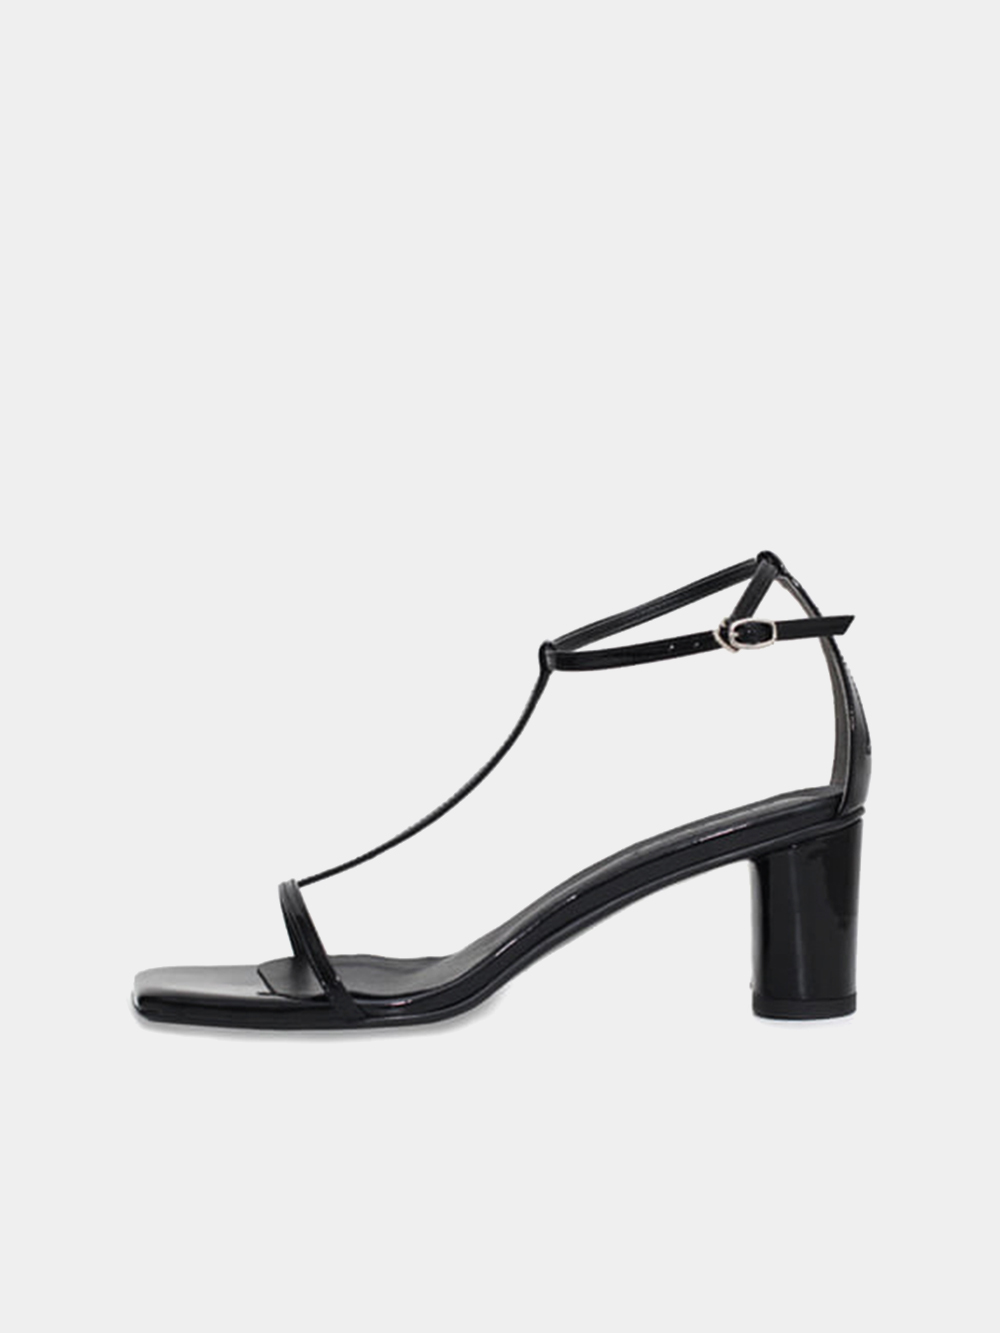 [Out of stock] Mrc057 T Sandal (Black CK)